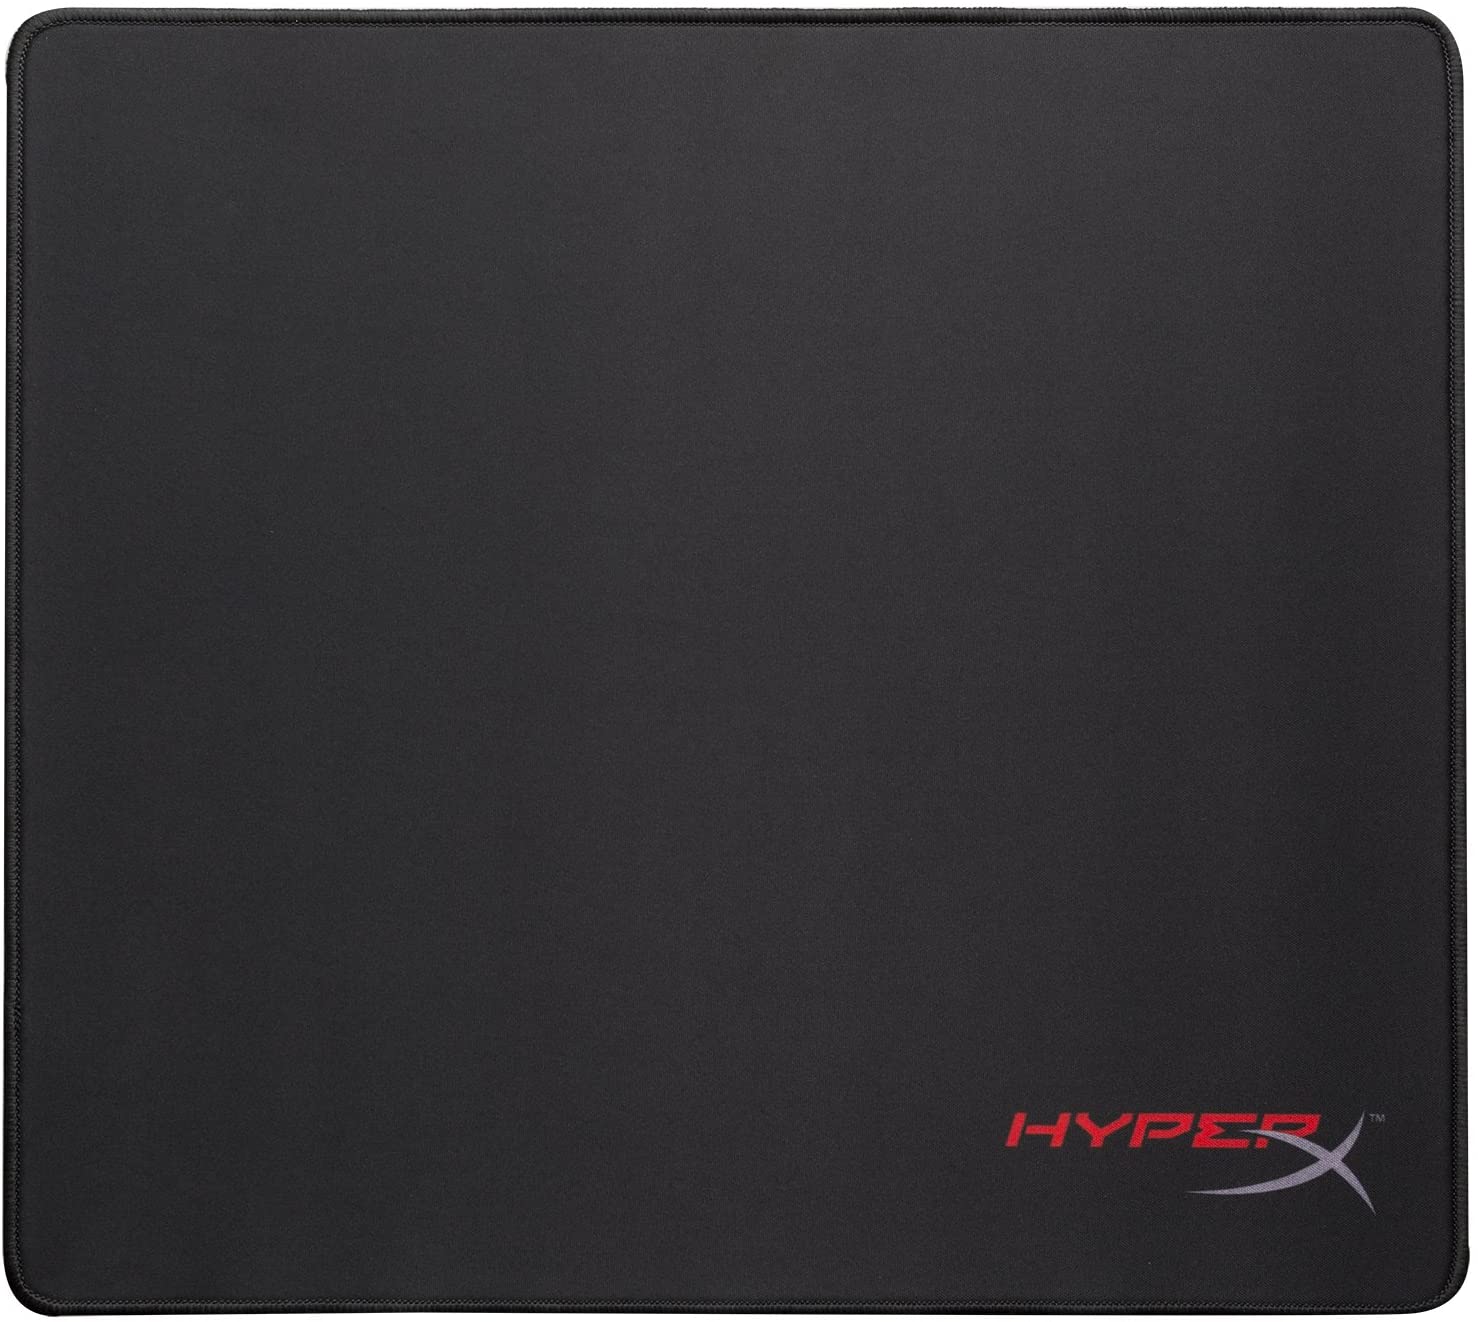 HyperX FURY S Pro Gaming MousePad L HX-MPFS-L